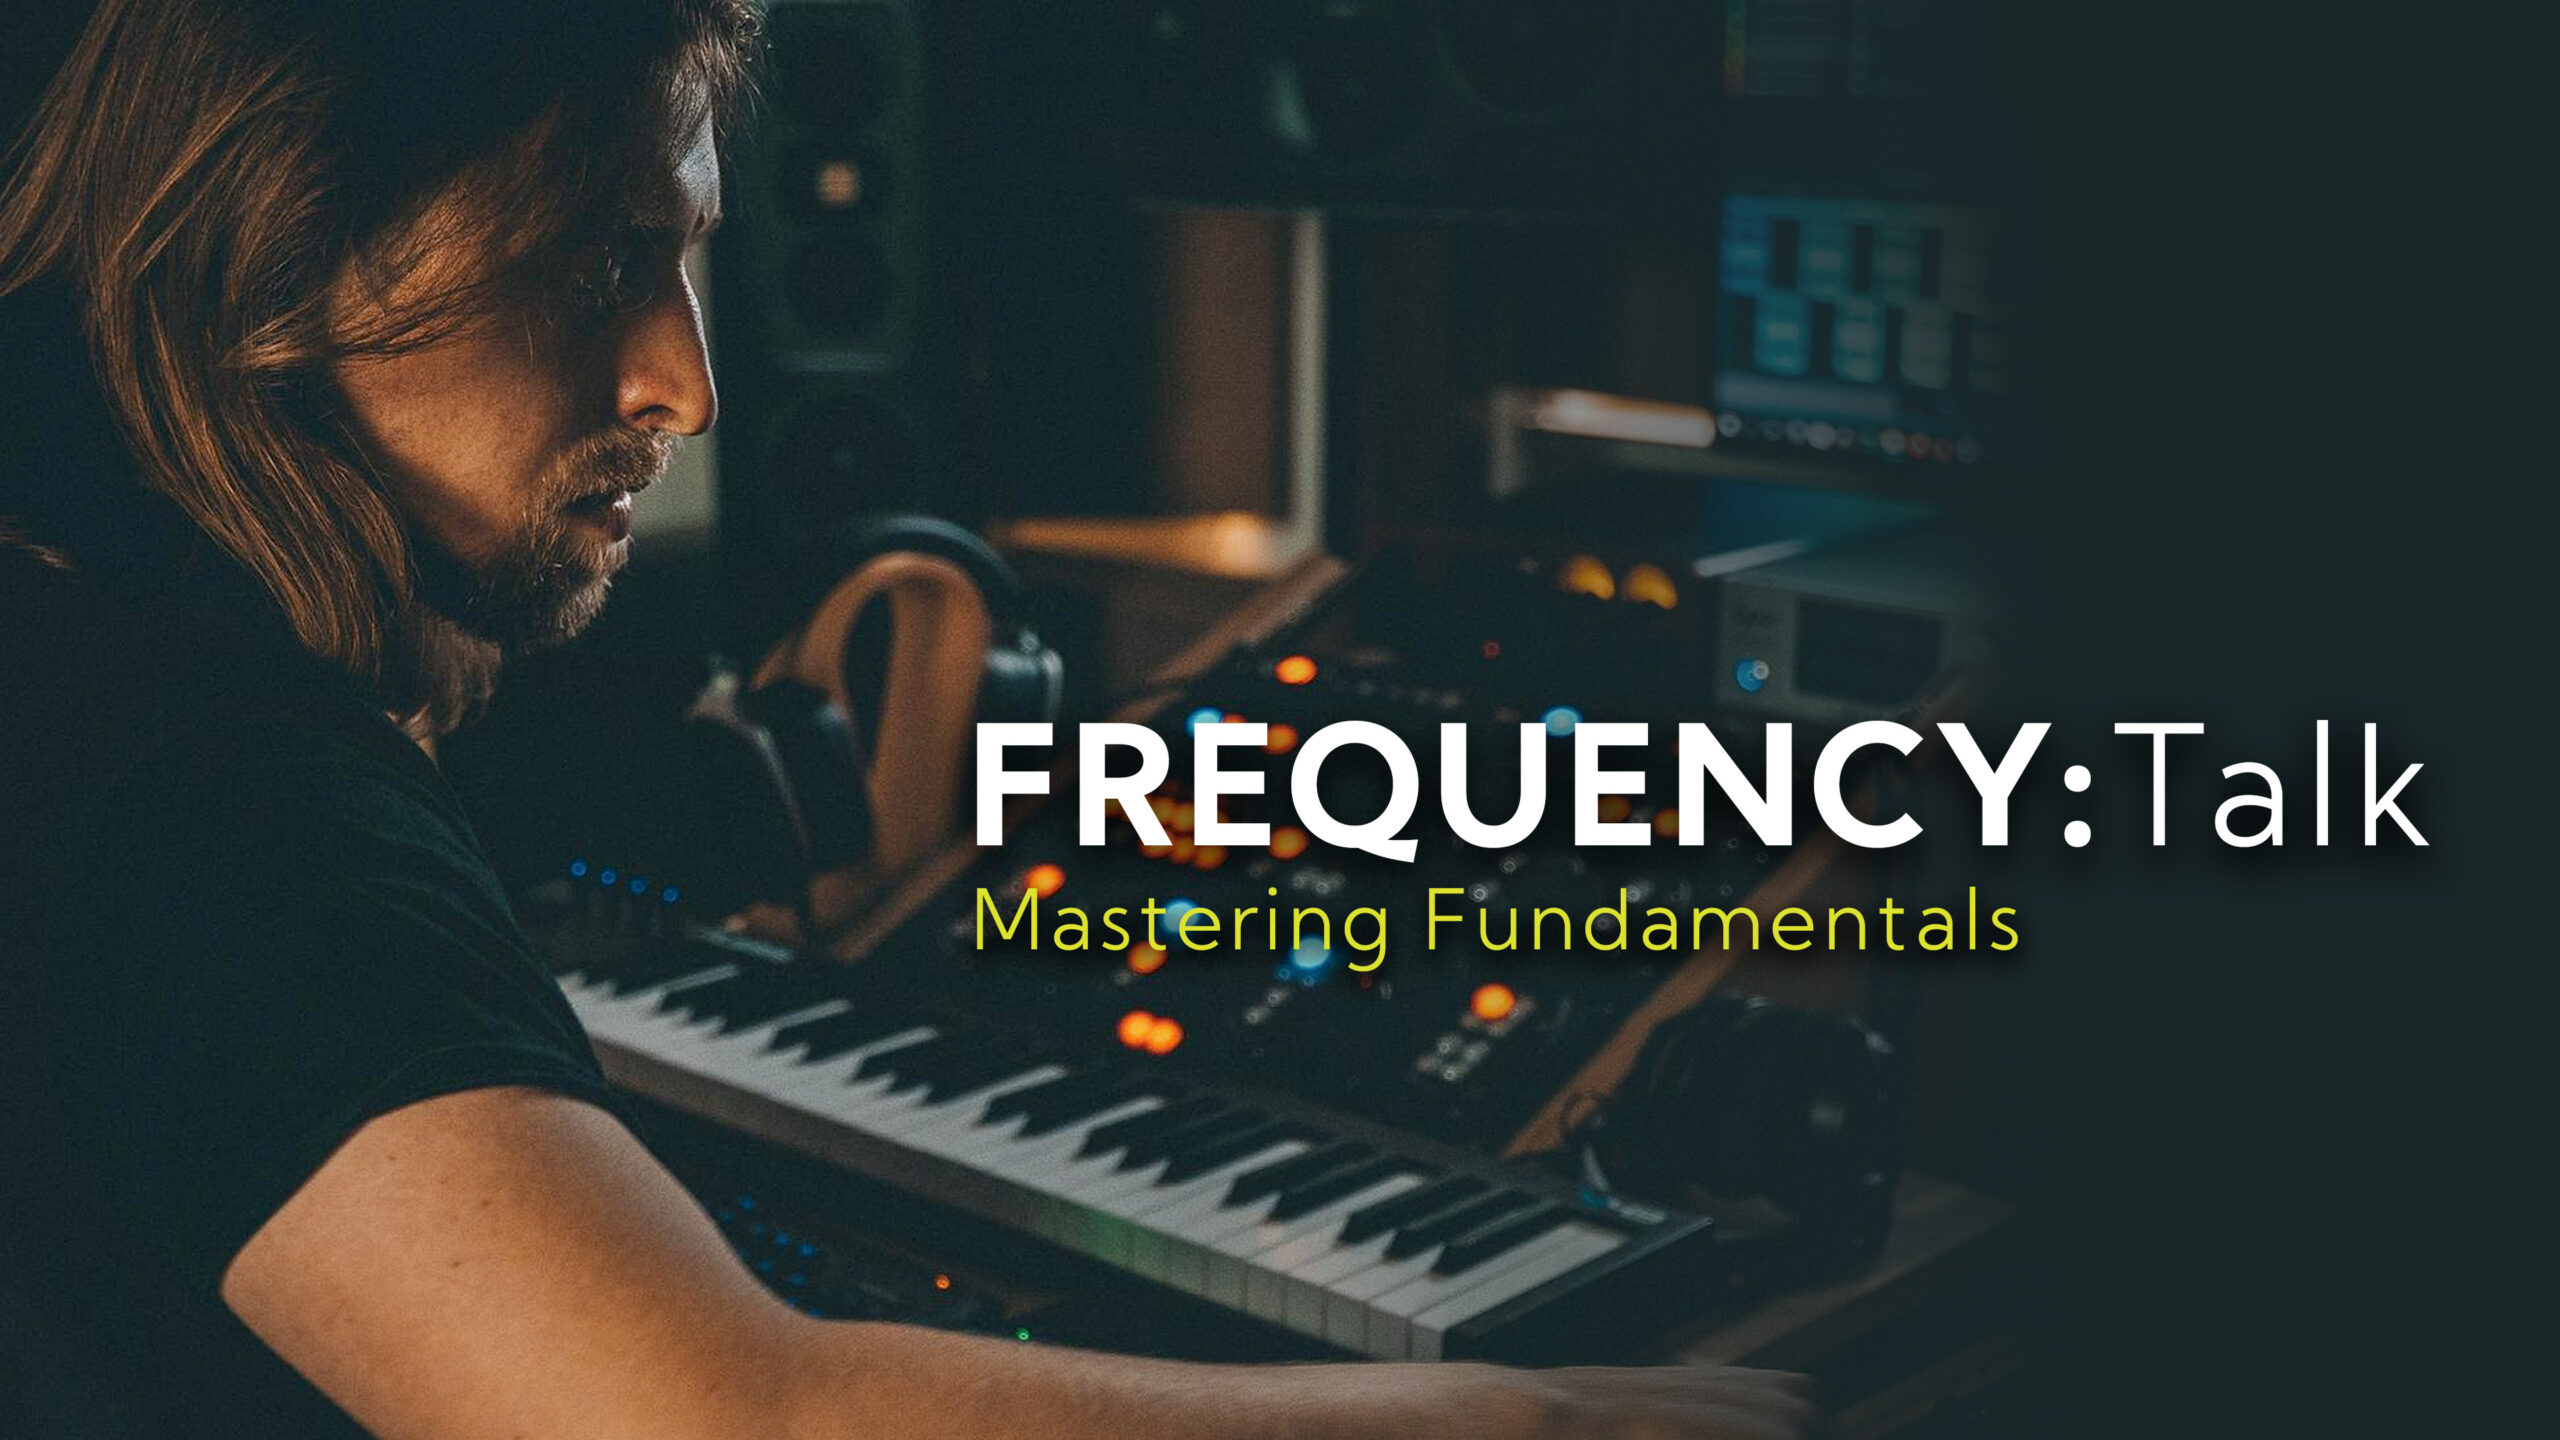 Frequency:Talk Episode 01 – Mastering Fundamentals